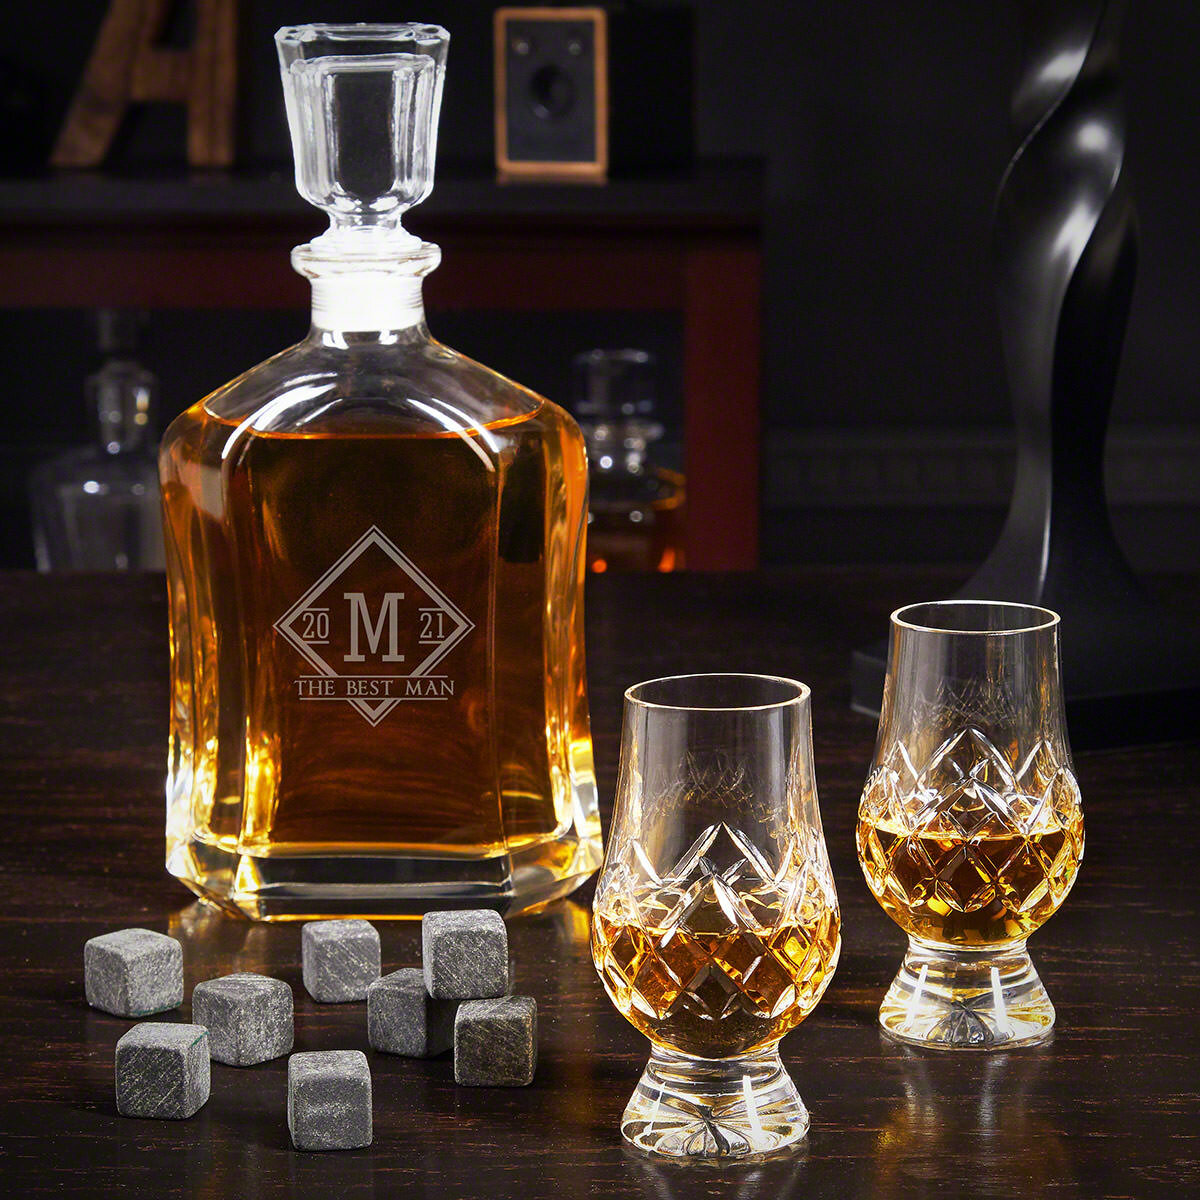 Crystal Whiskey Decanter Set Glass Brandy Carafe Scotch Vodka 7X Vintage No Tax!